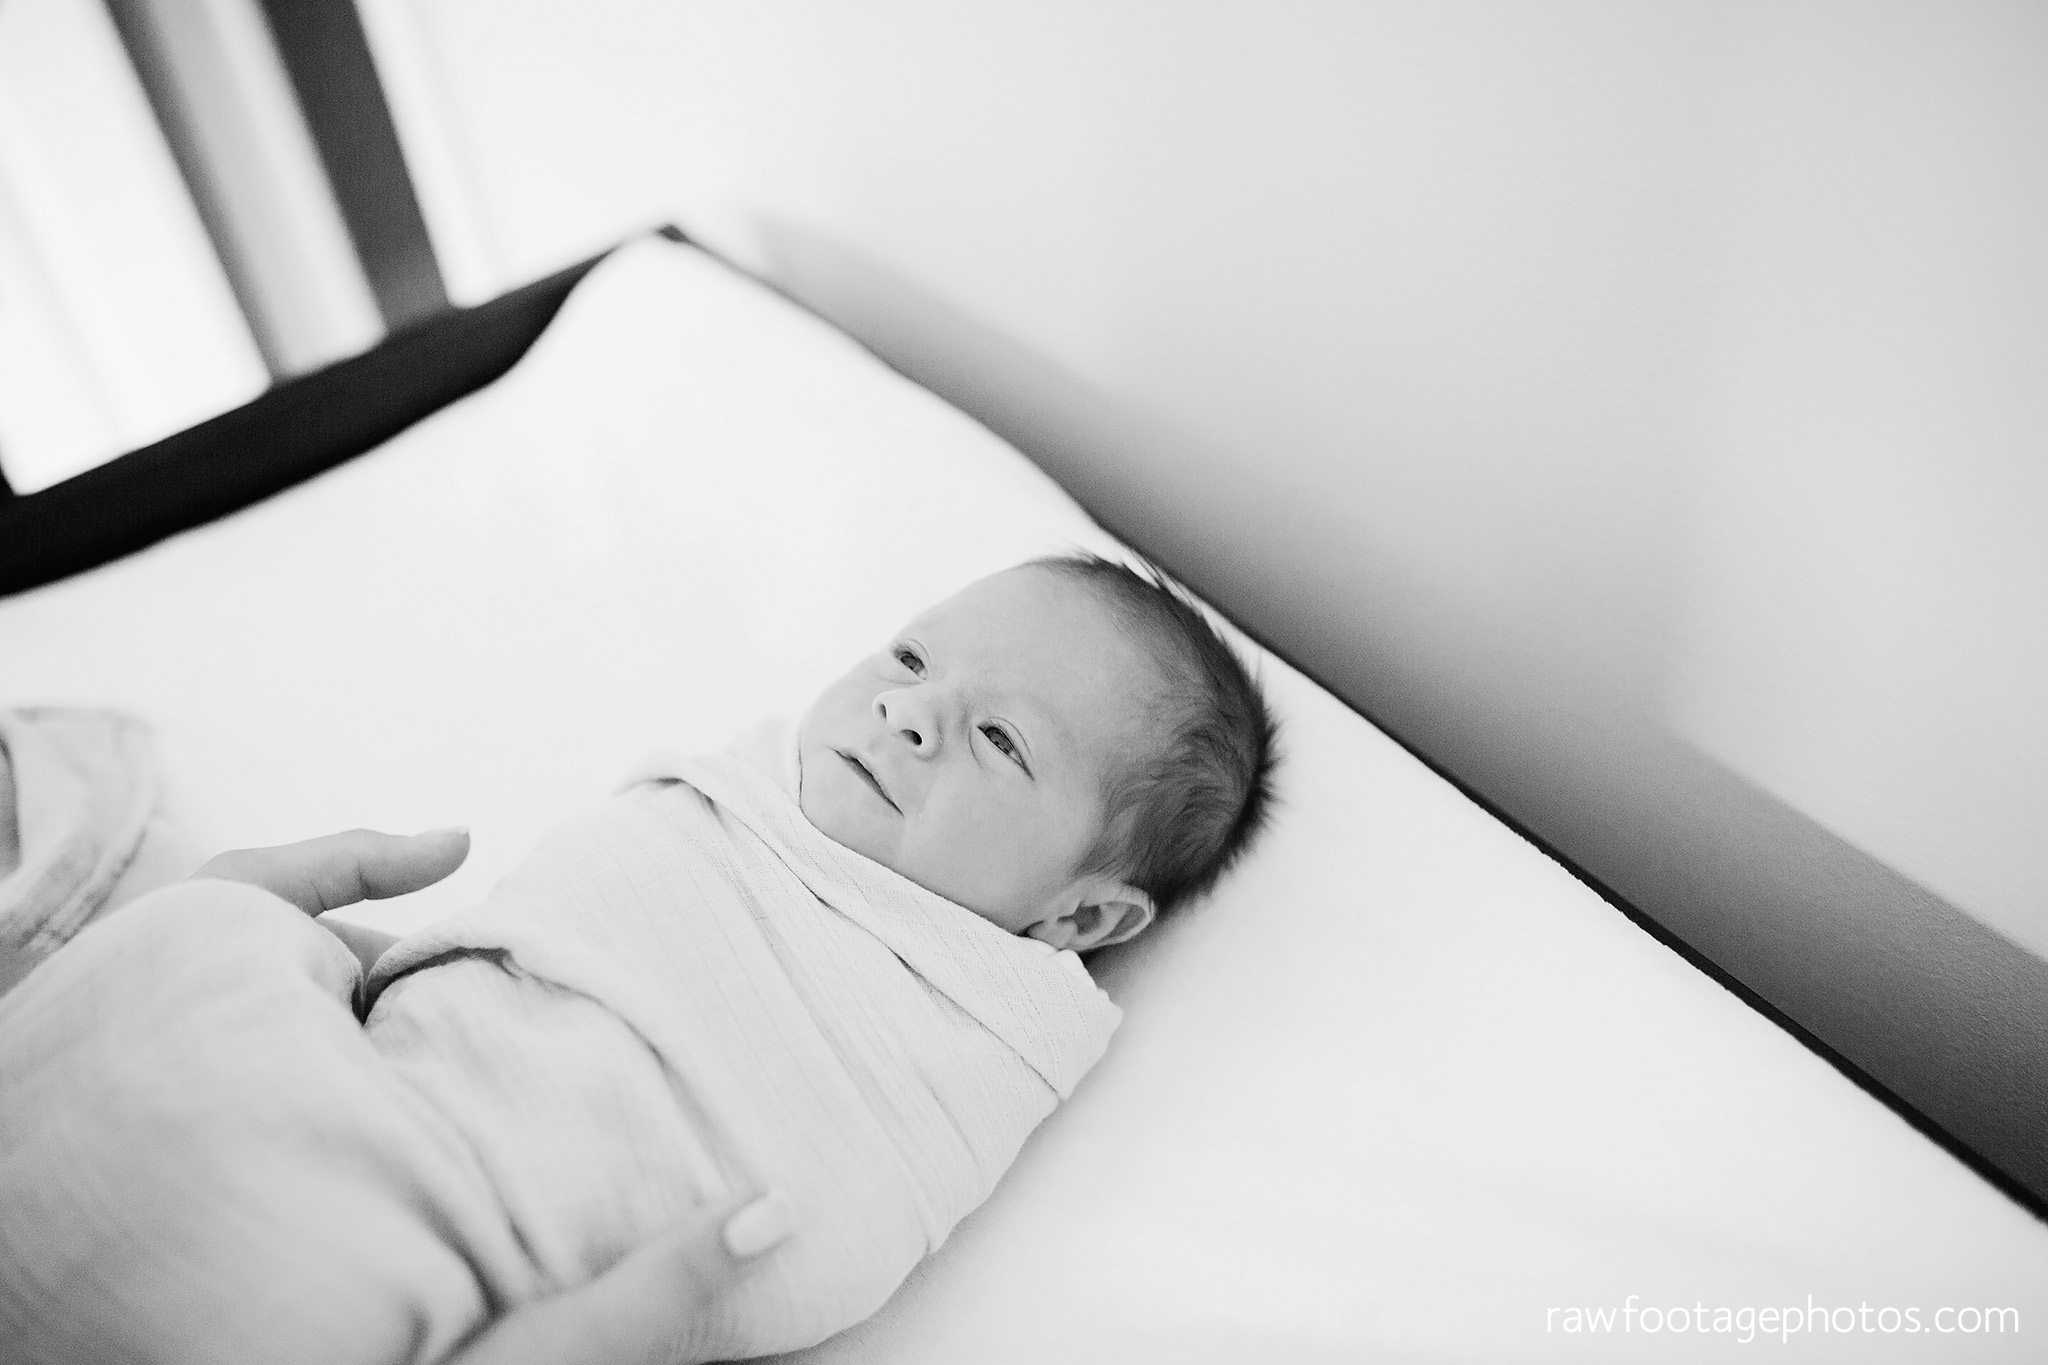 london_ontario_newborn_photographer-newborn_lifestyle_photography-baby_boy-raw_footage_photography007.jpg